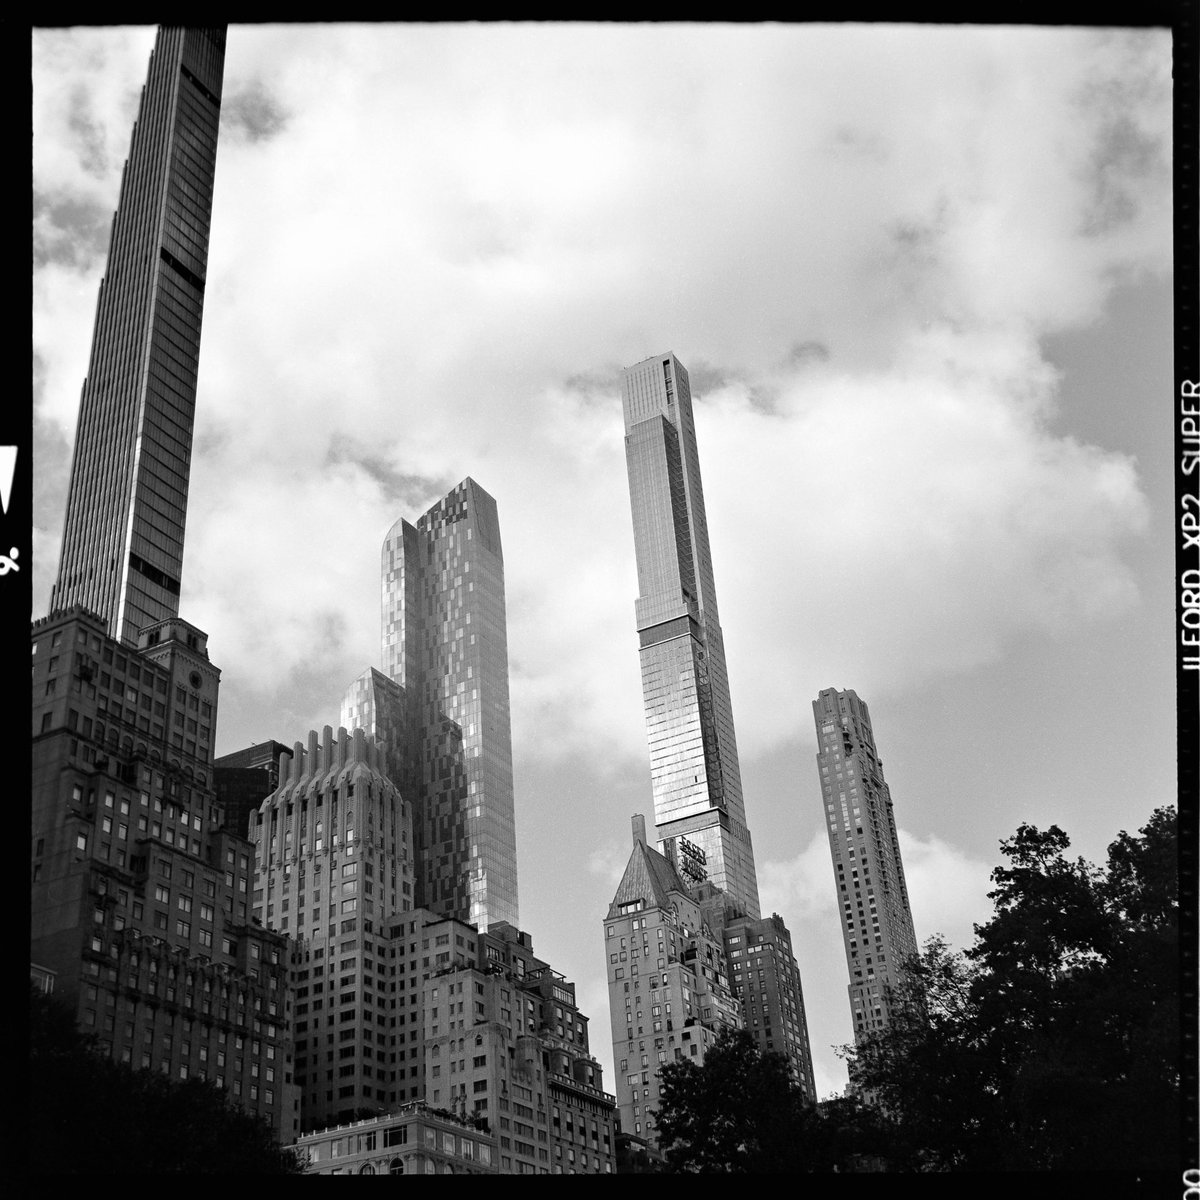 Slim Jim
@ILFORDPhoto #slimjim #skyscrapers #skyscraper #skyscraping_architecture #architecture #architecturephotography #architecturedesign #centralpark #centralparknyc #ilford #ilfordxp2 #ilfordxp2super400 #clouds #rollei #rolleiflex #film #filmphotography #filmisnotdead #6x6